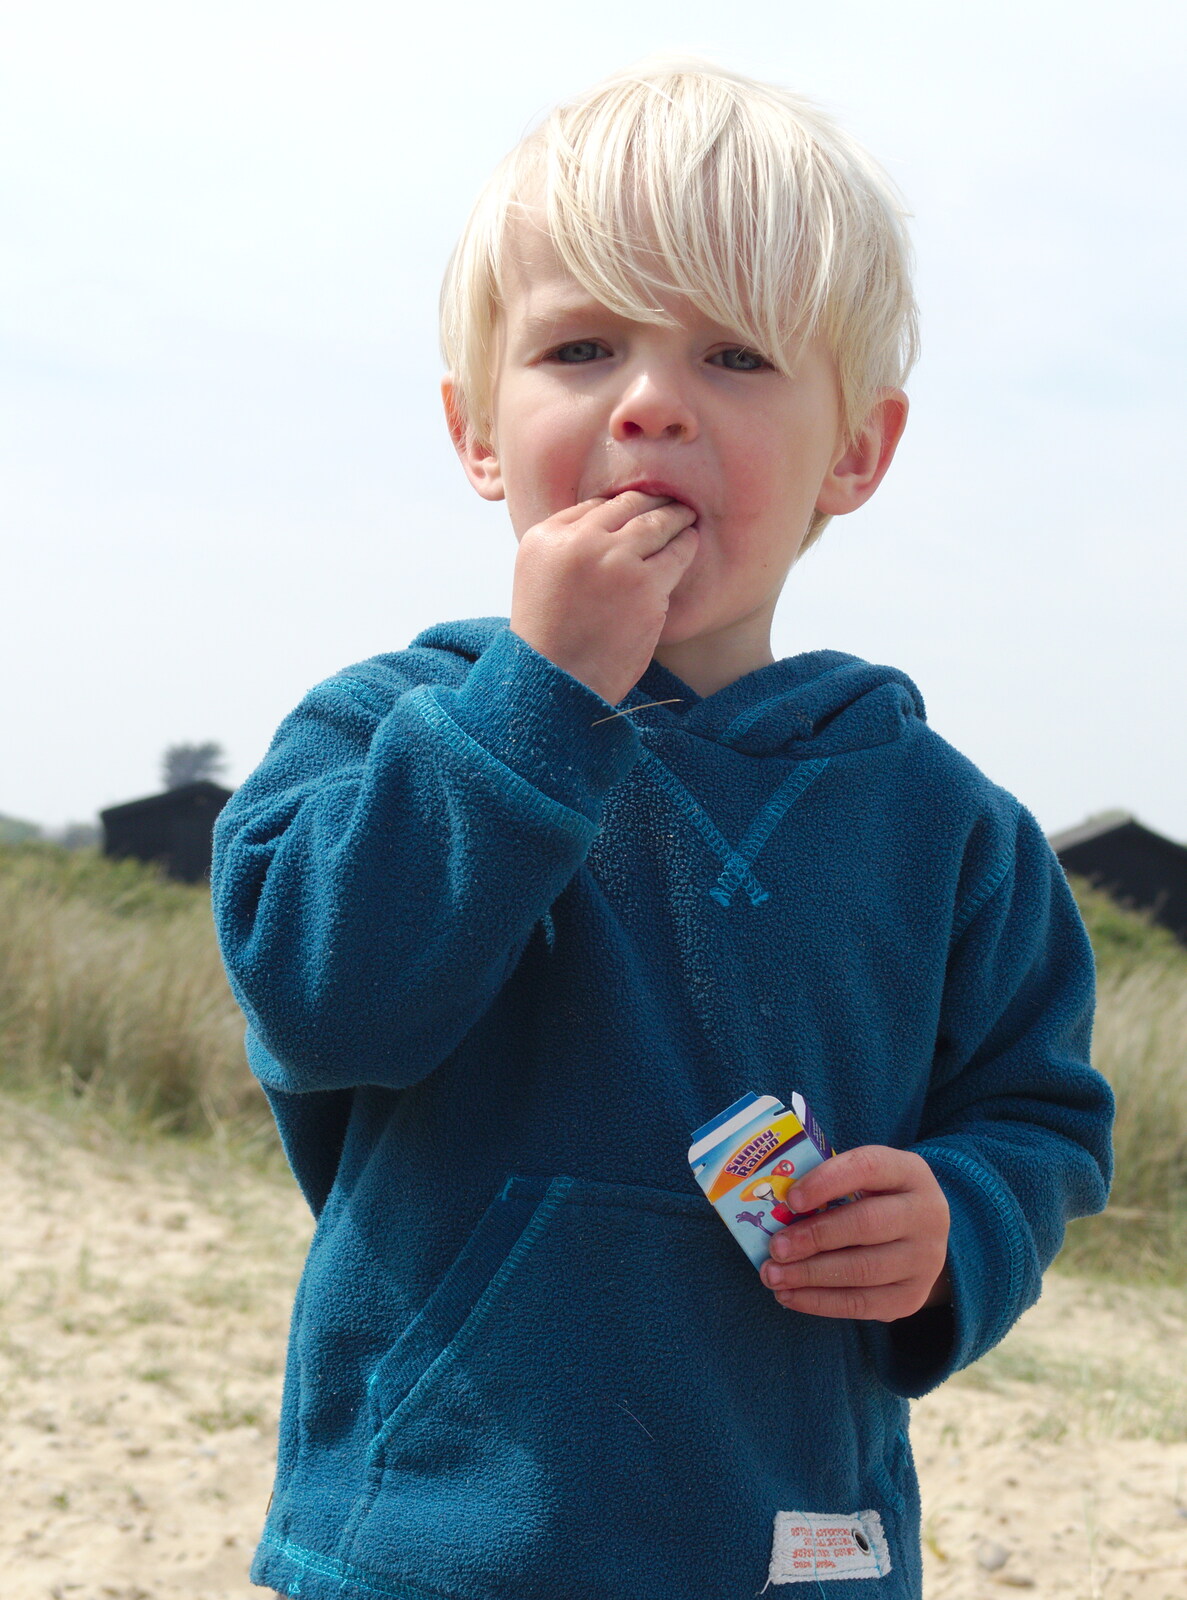 Harry eats raisins (and sand) from Life's A Windy Beach, Walberswick, Suffolk - 5th May 2014